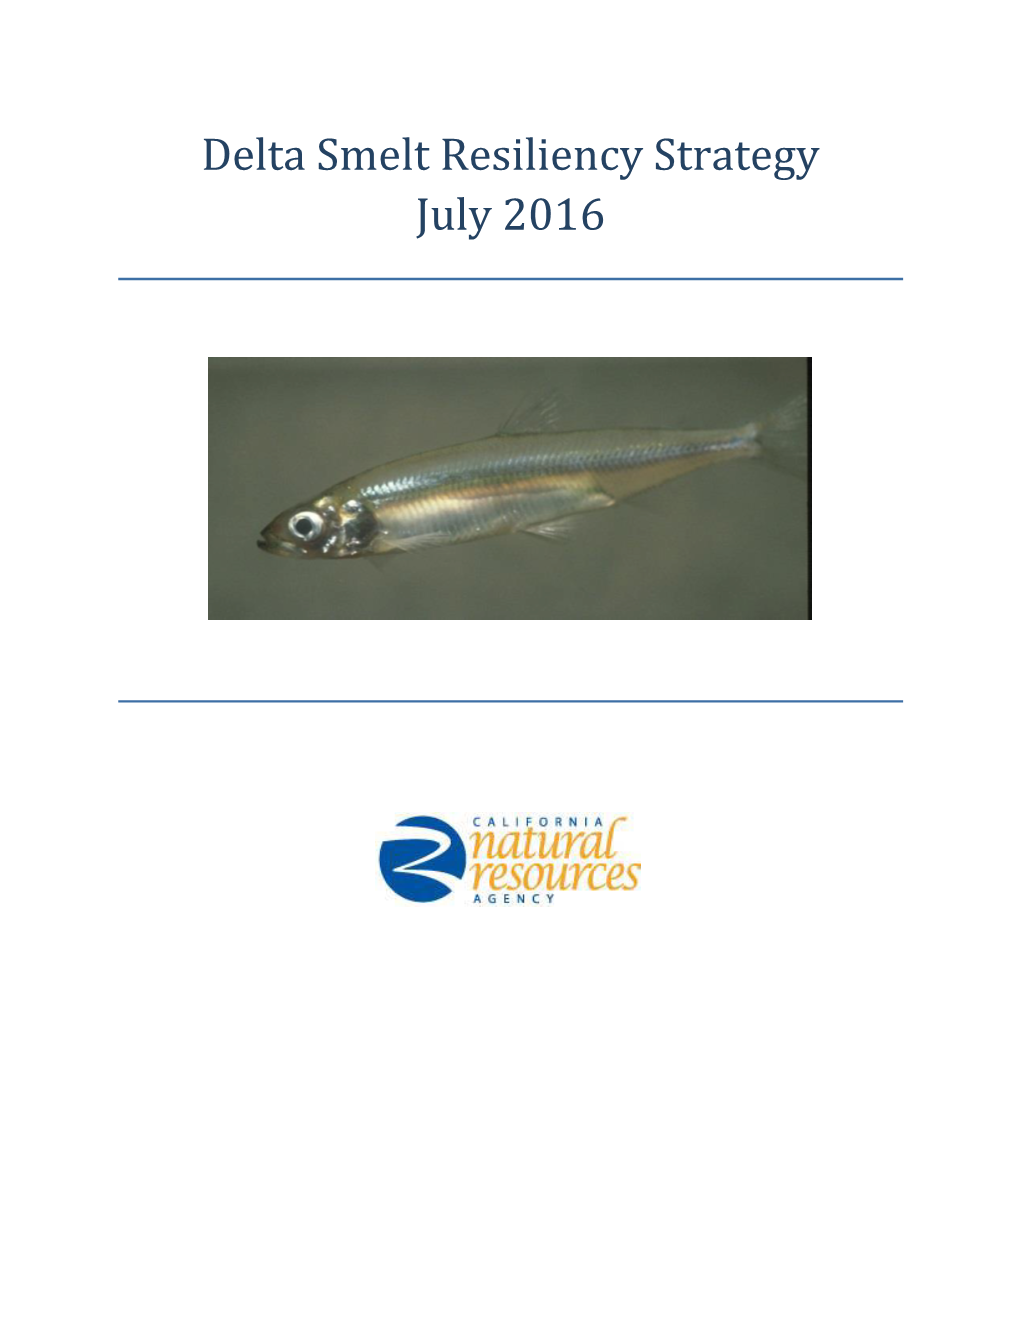 Delta Smelt Resiliency Strategy July 2016